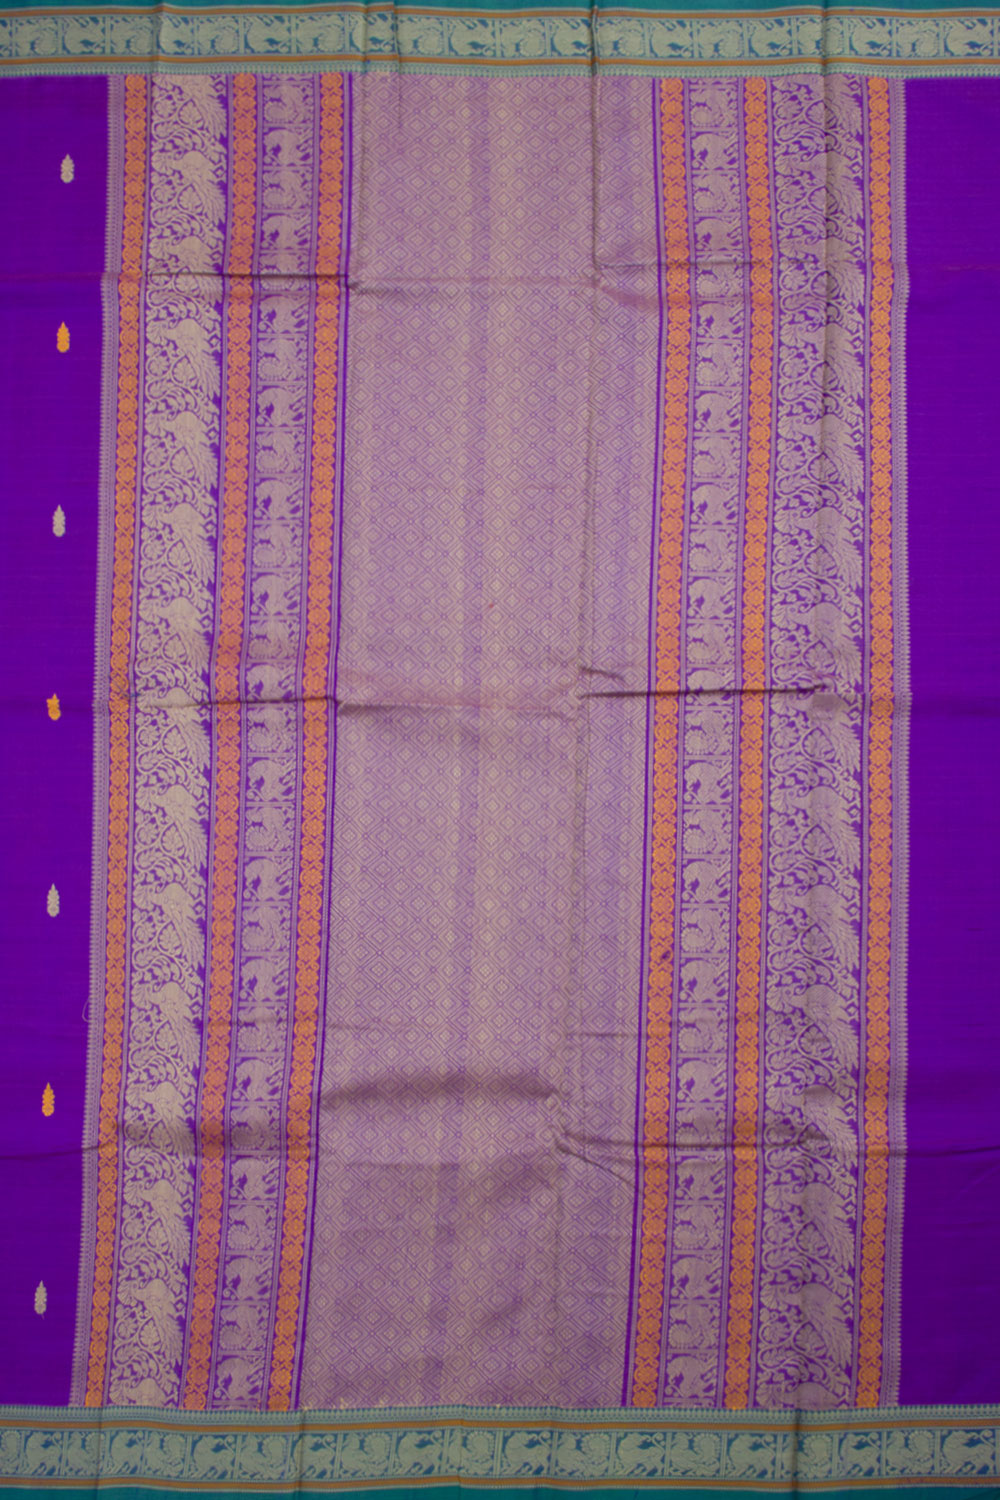 Violet Handloom Kanchi Silk Cotton Saree 10061317